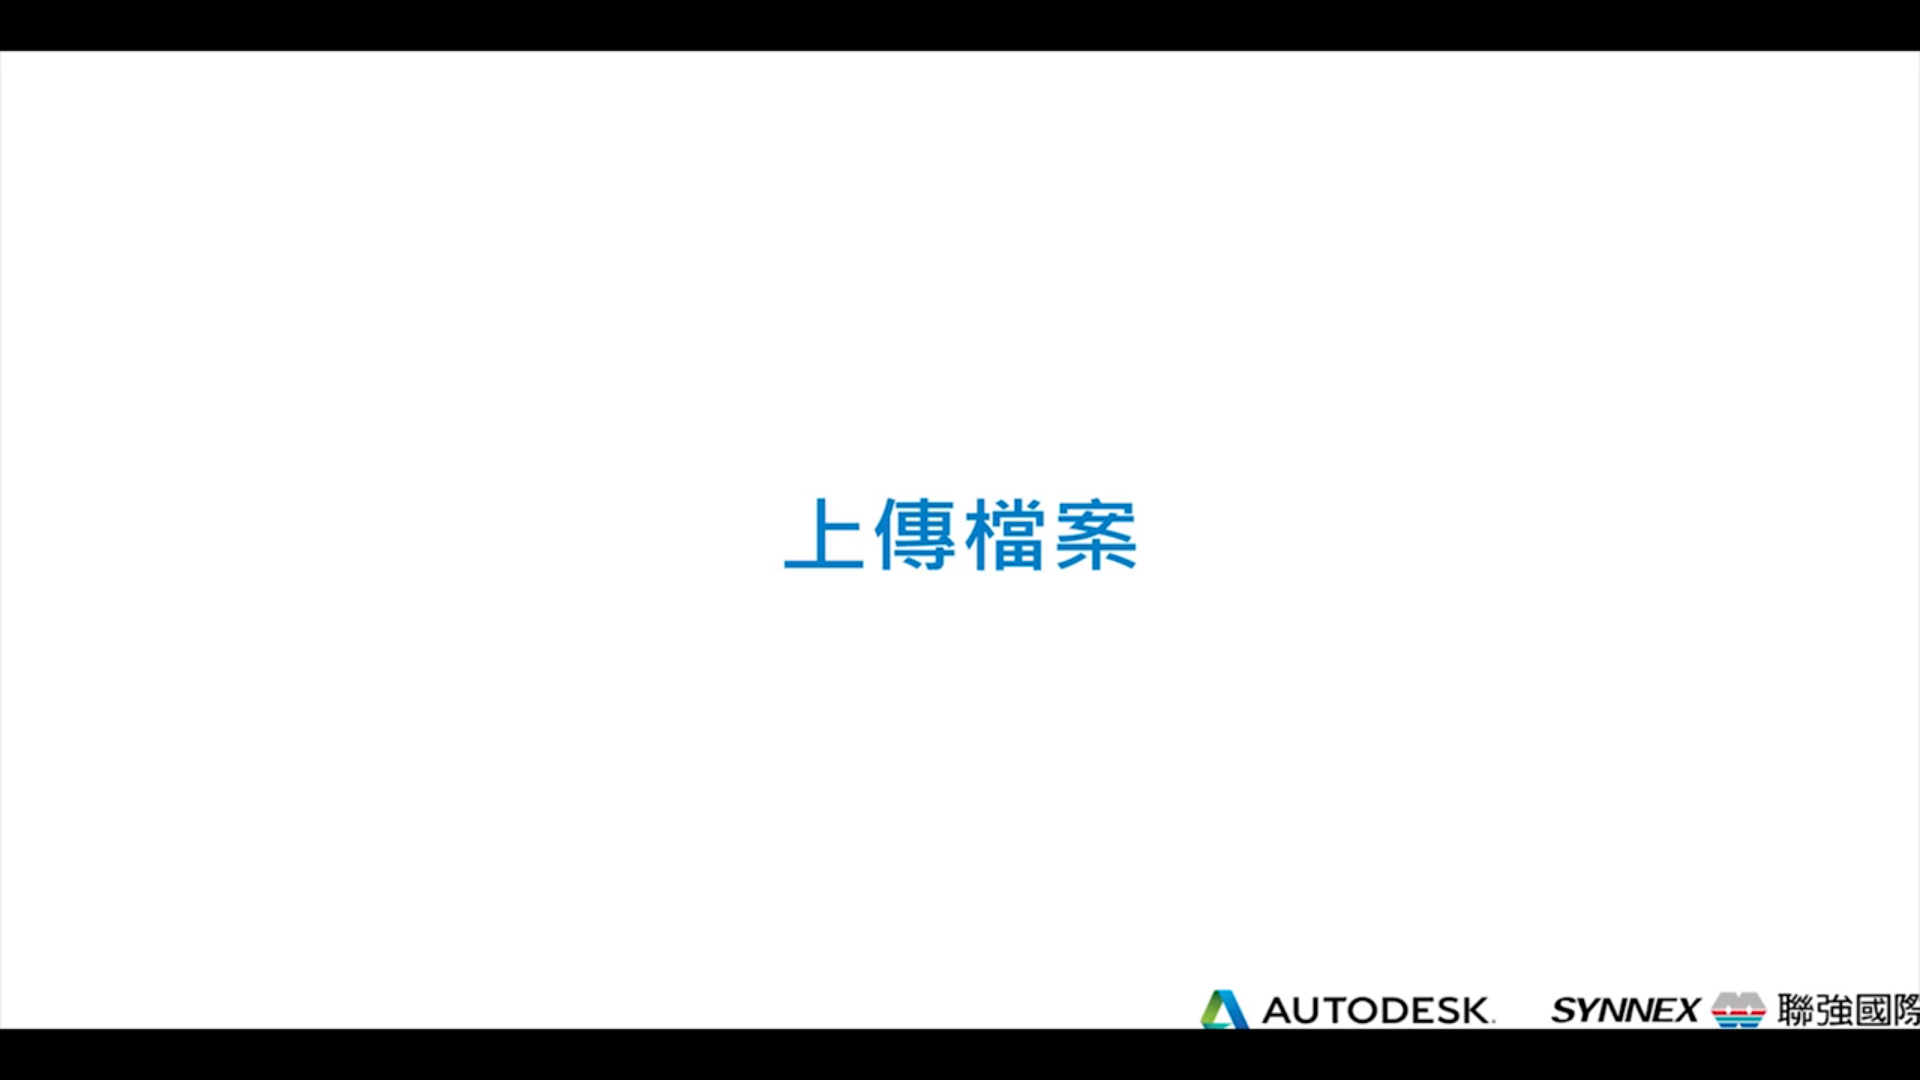 【Autodesk Construction Cloud】文件管理 (三) Upload Files